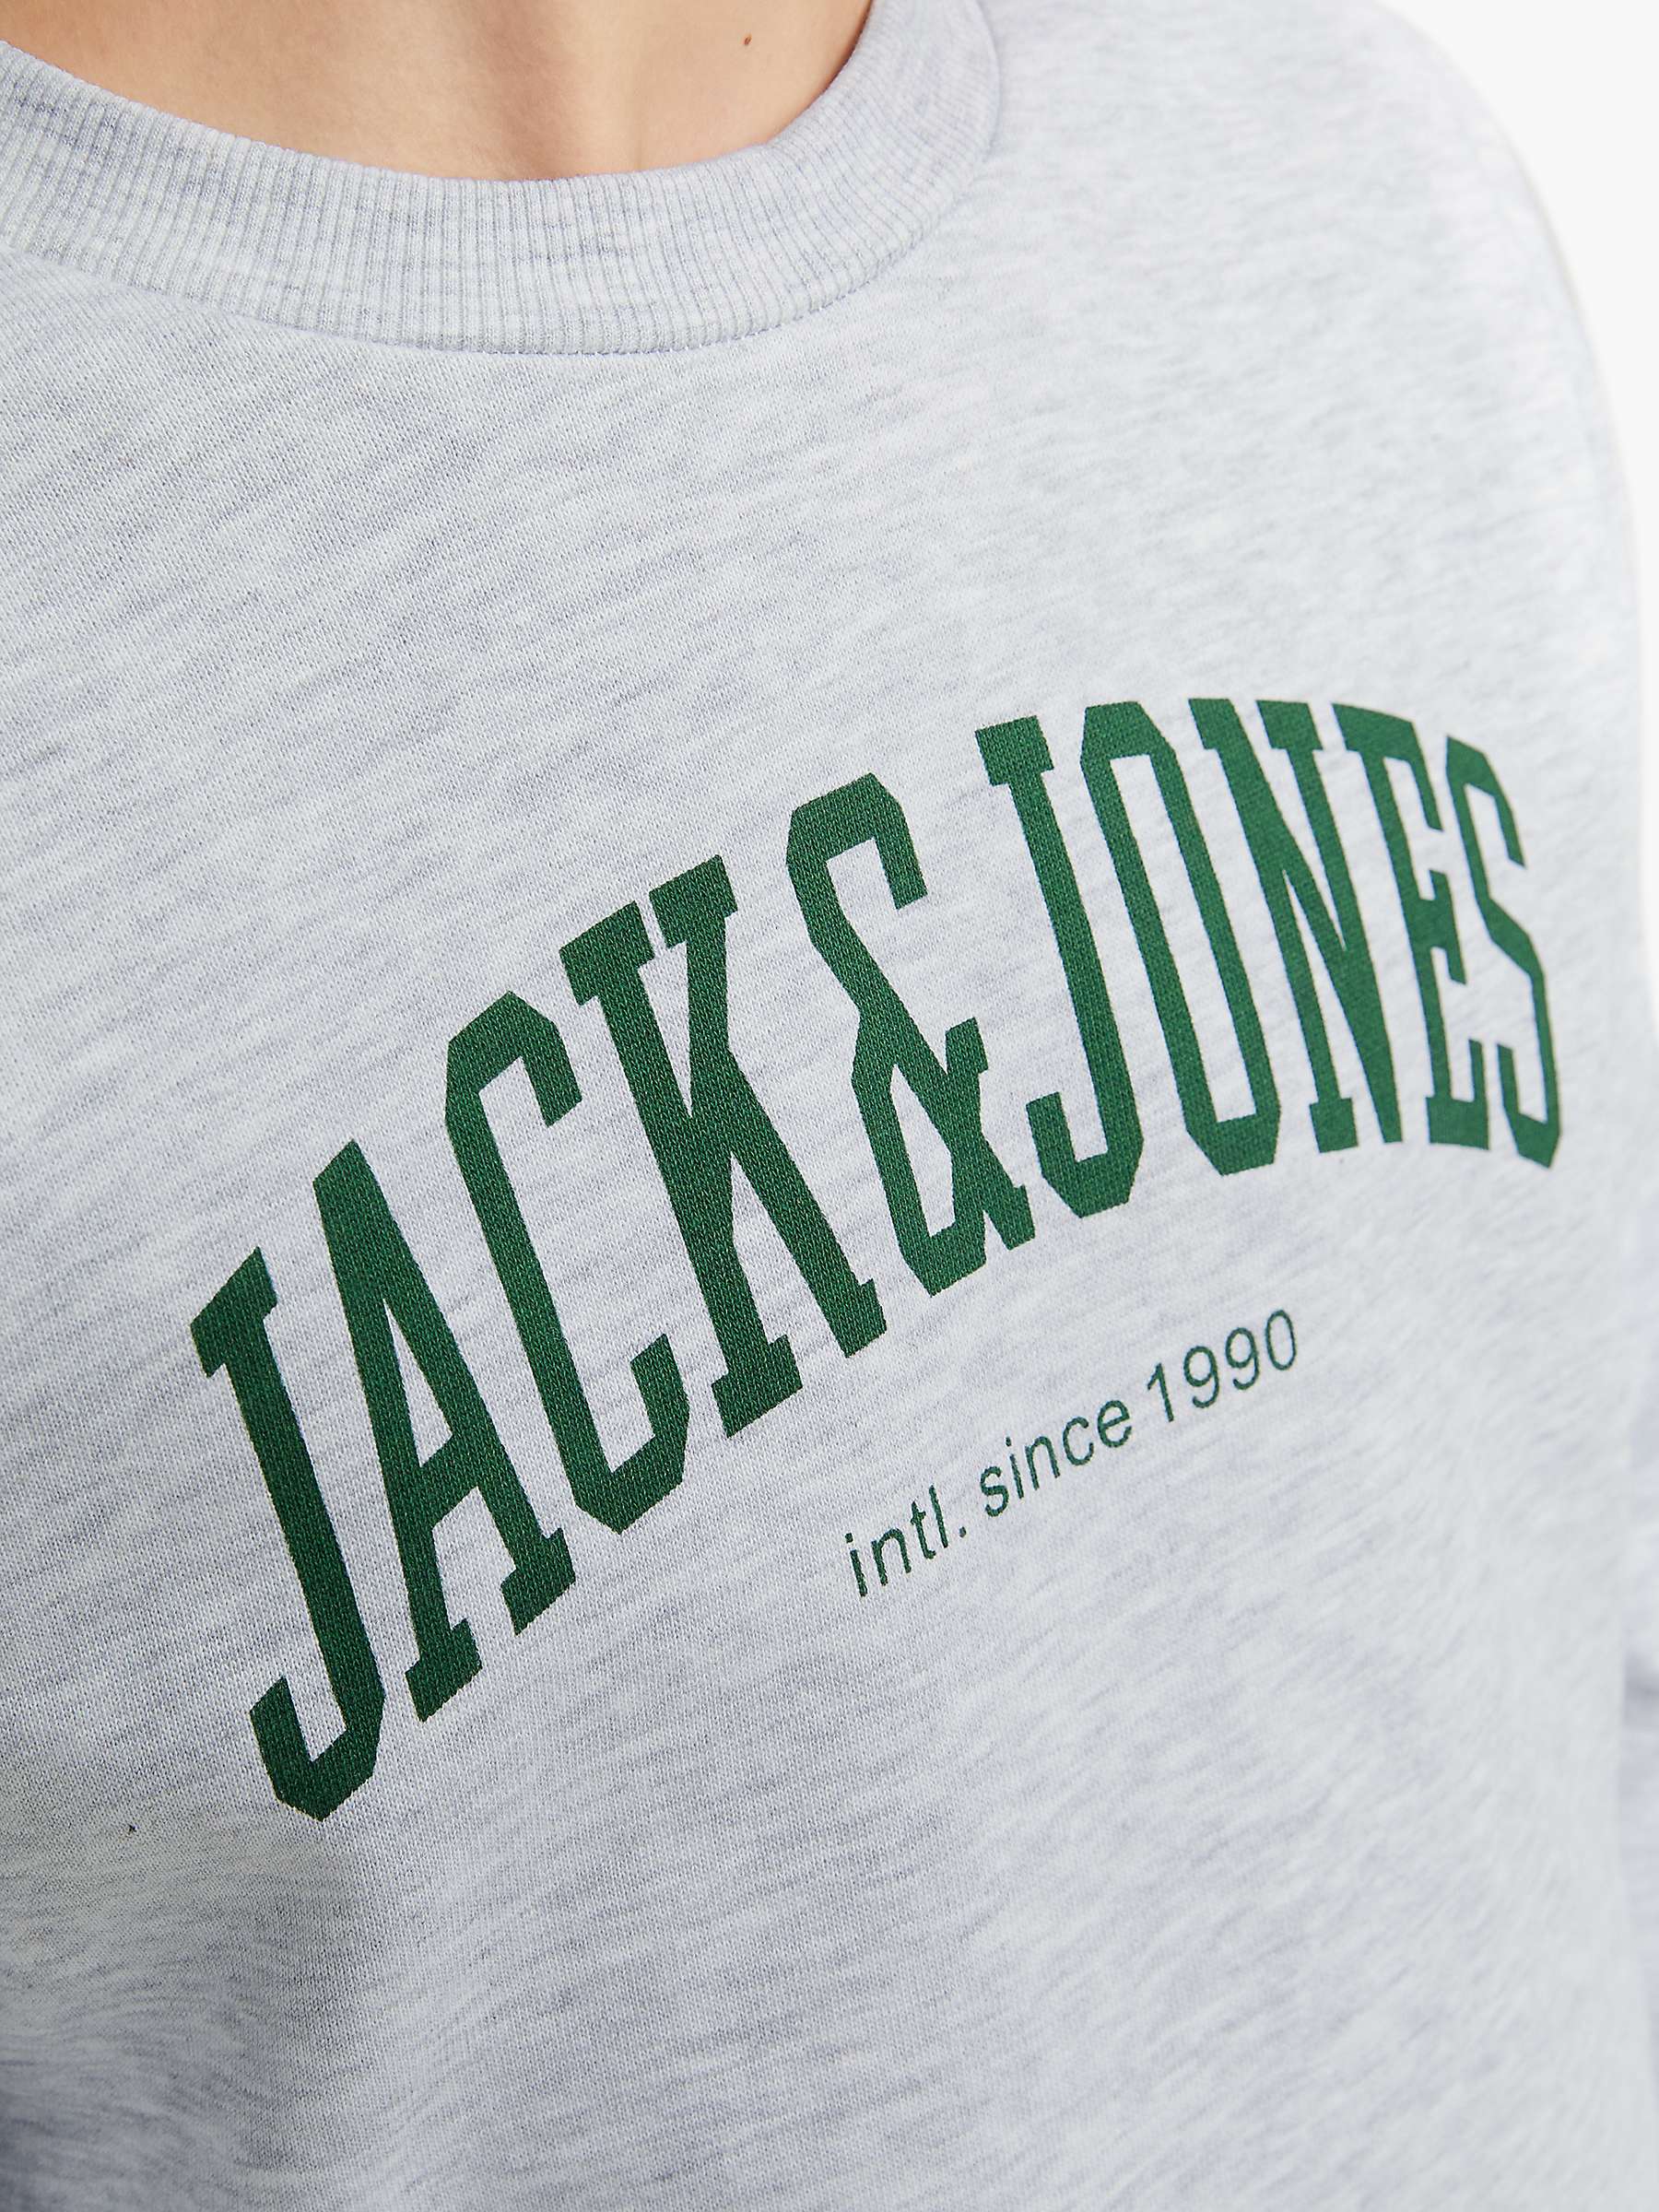 Buy Jack & Jones Kids' Josh Logo Sweatshirt, White Melange Online at johnlewis.com